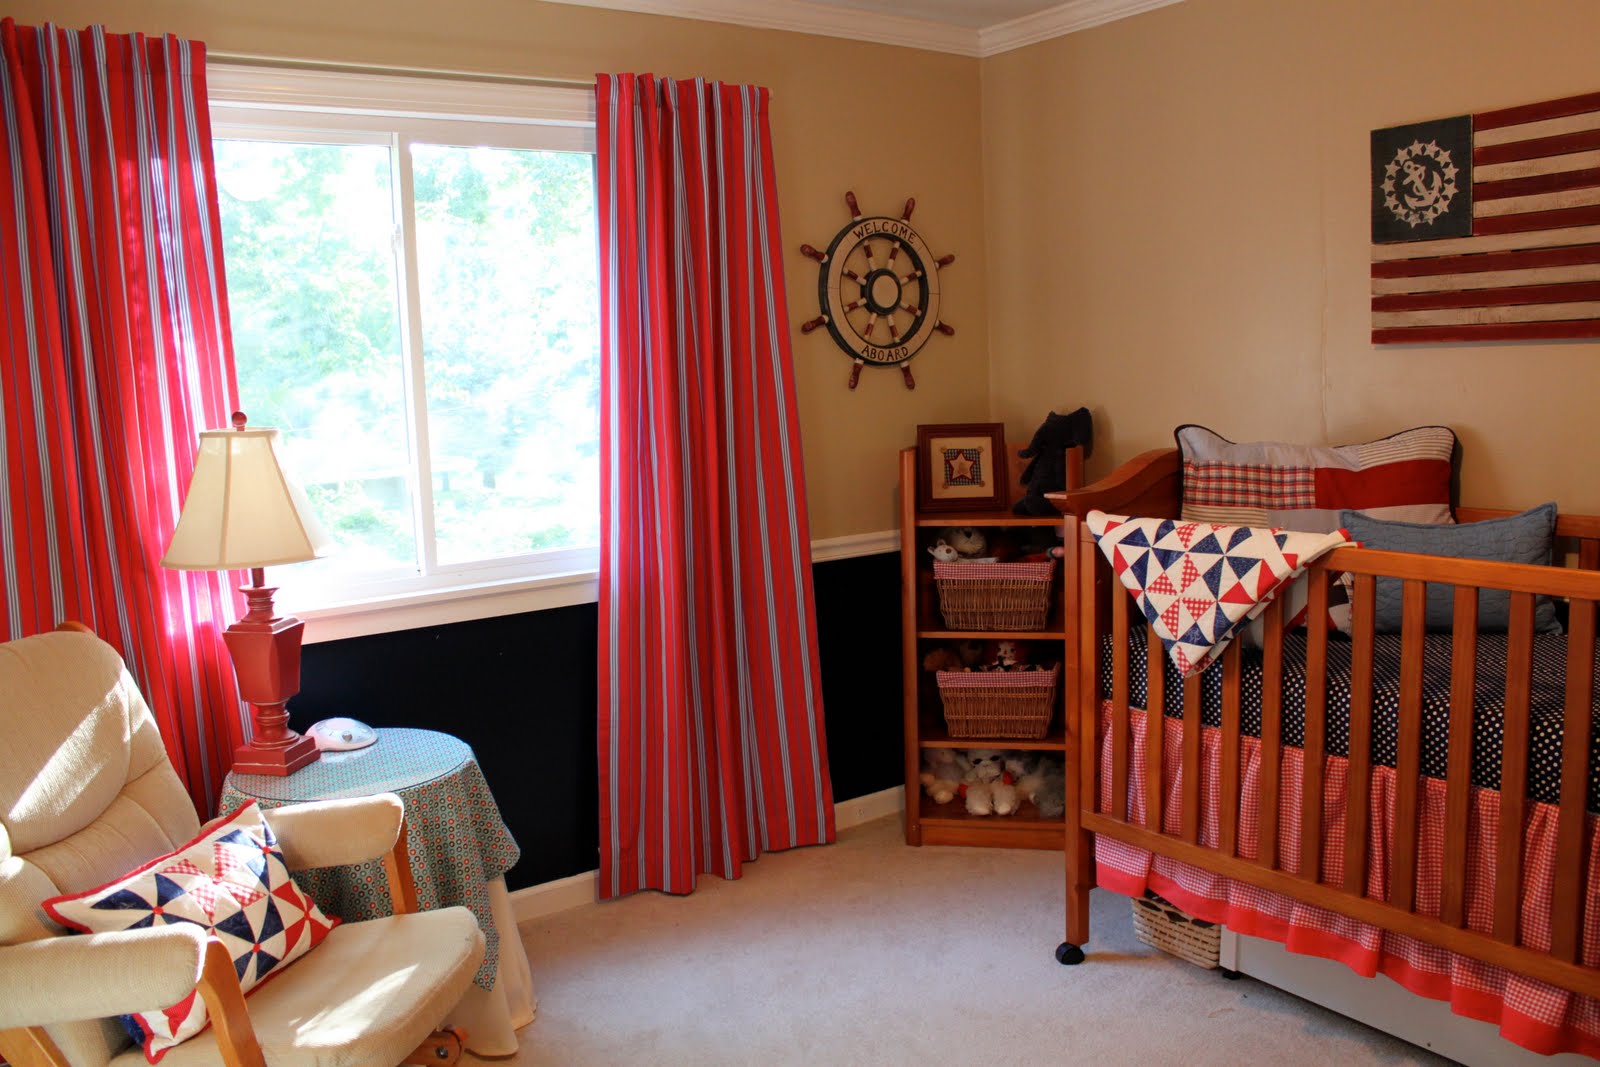 Baby Boy's Room: A Nautical Nursery - The Cottage Mama